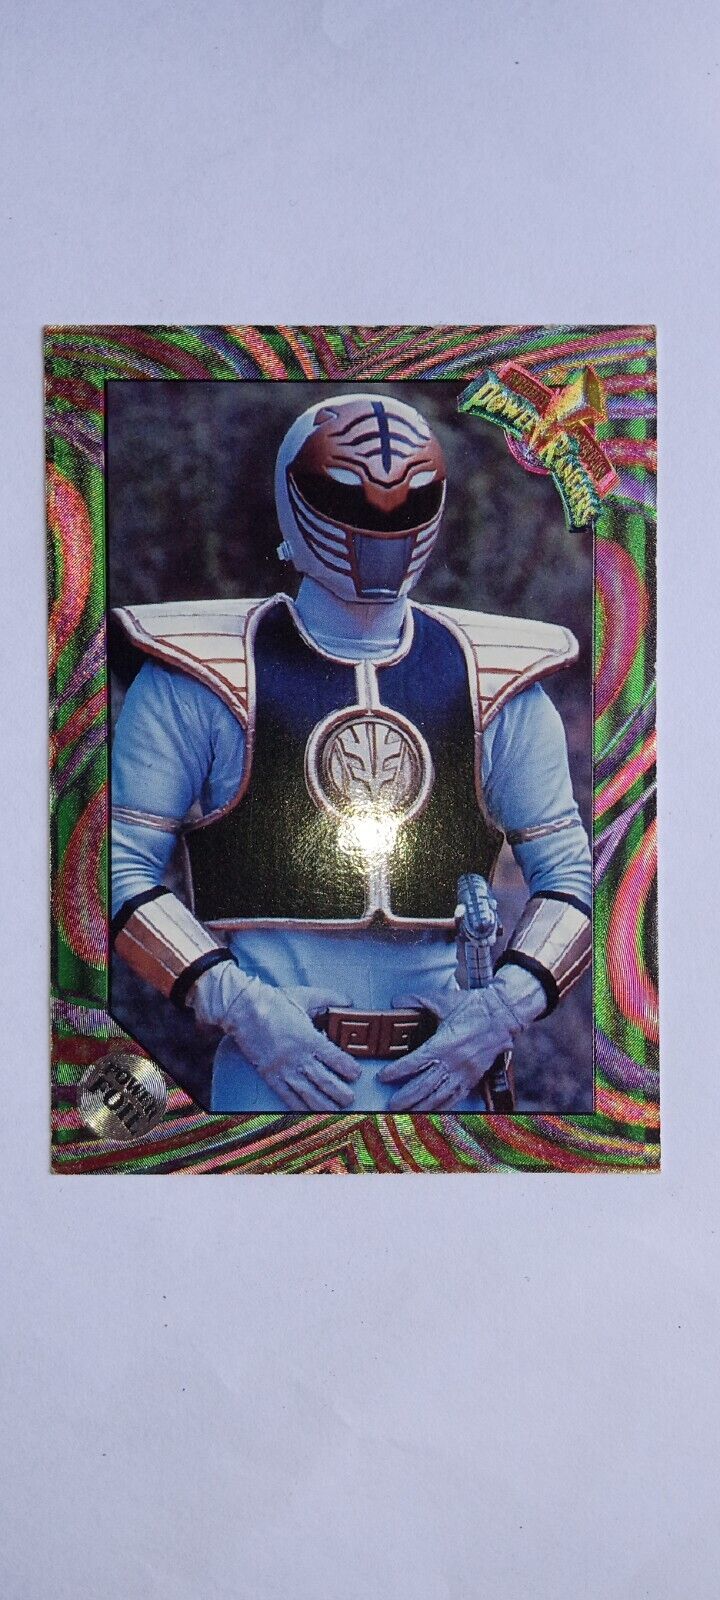 1994-95 Mighty Morphin Power Rangers New Season Retail Foil White Ranger Card